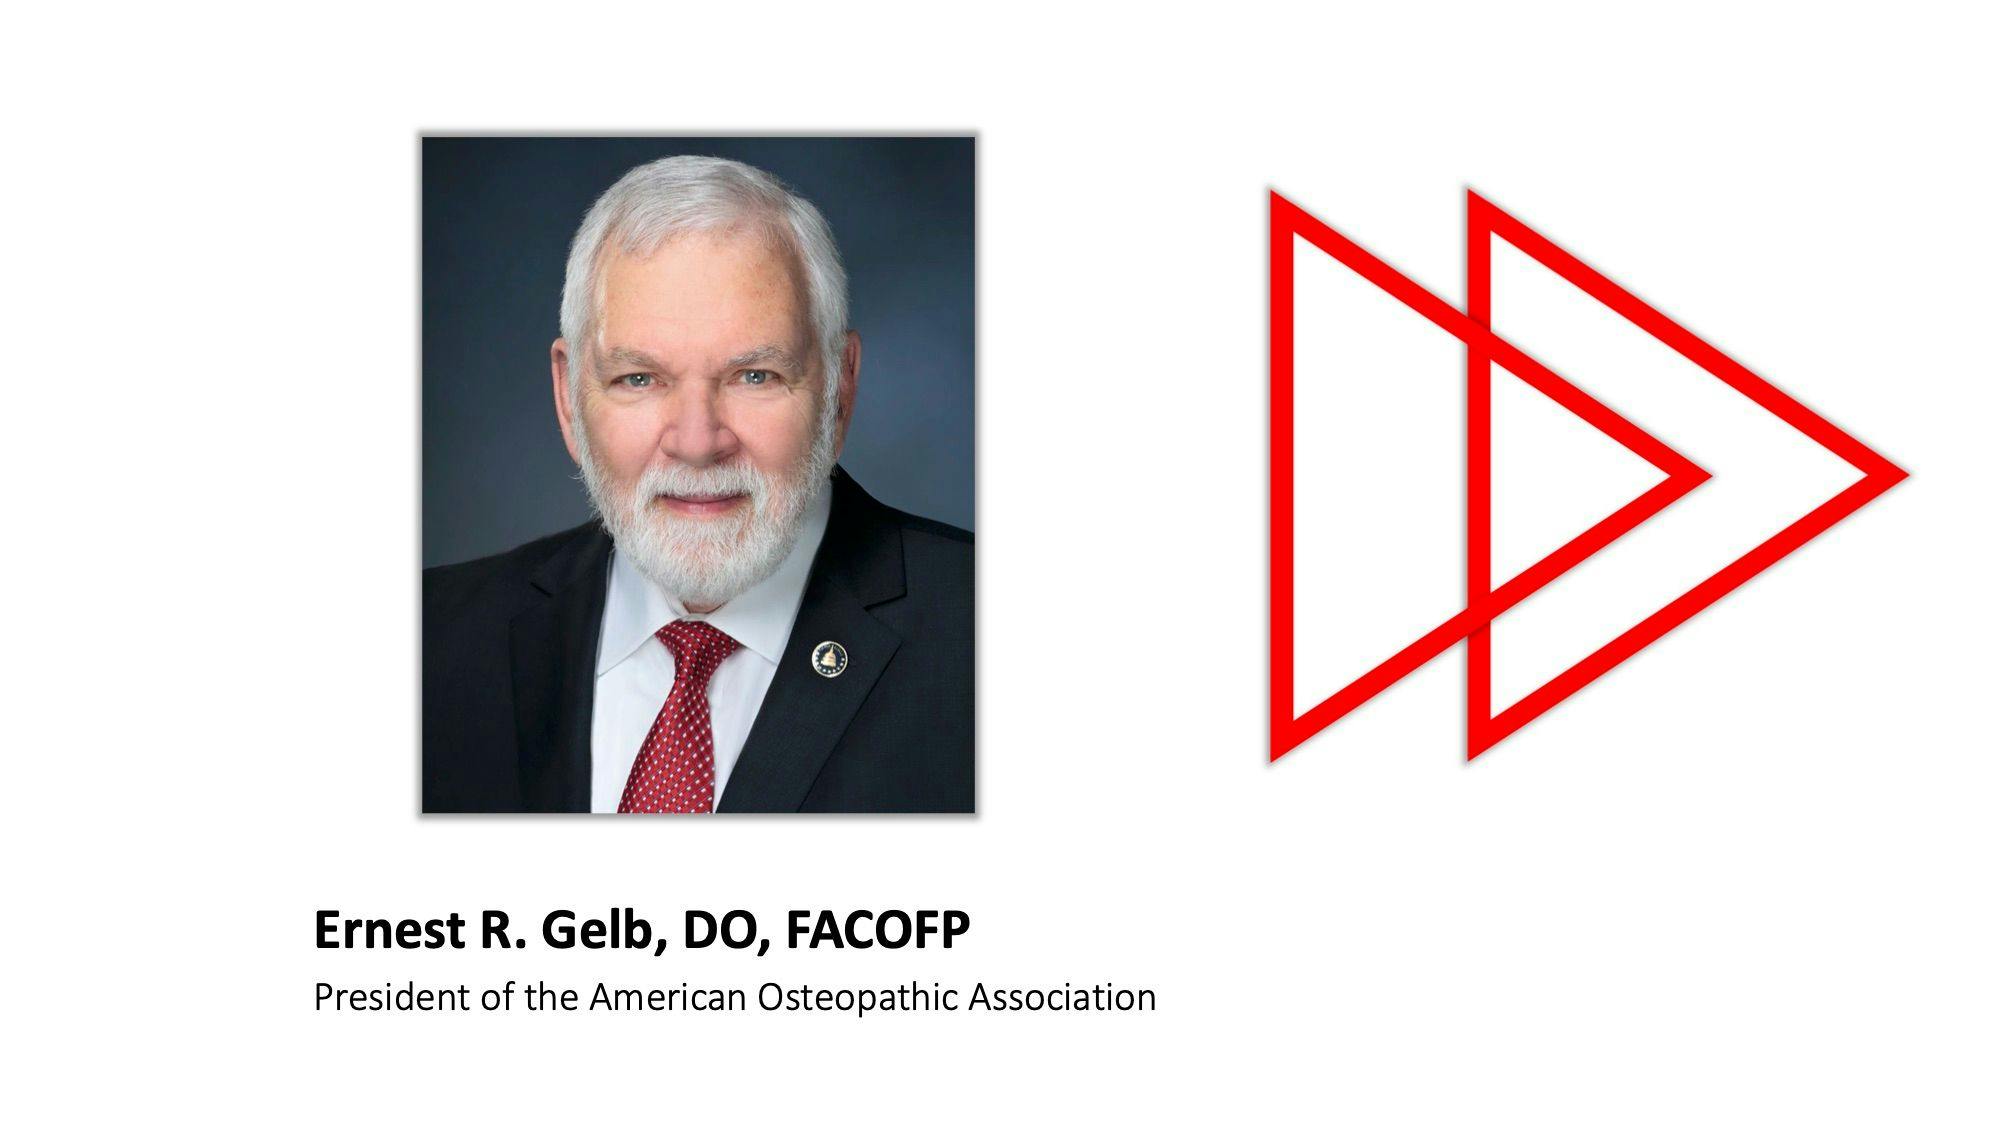 Ernest R. Gelb, DO, FACOFP, gives expert advice